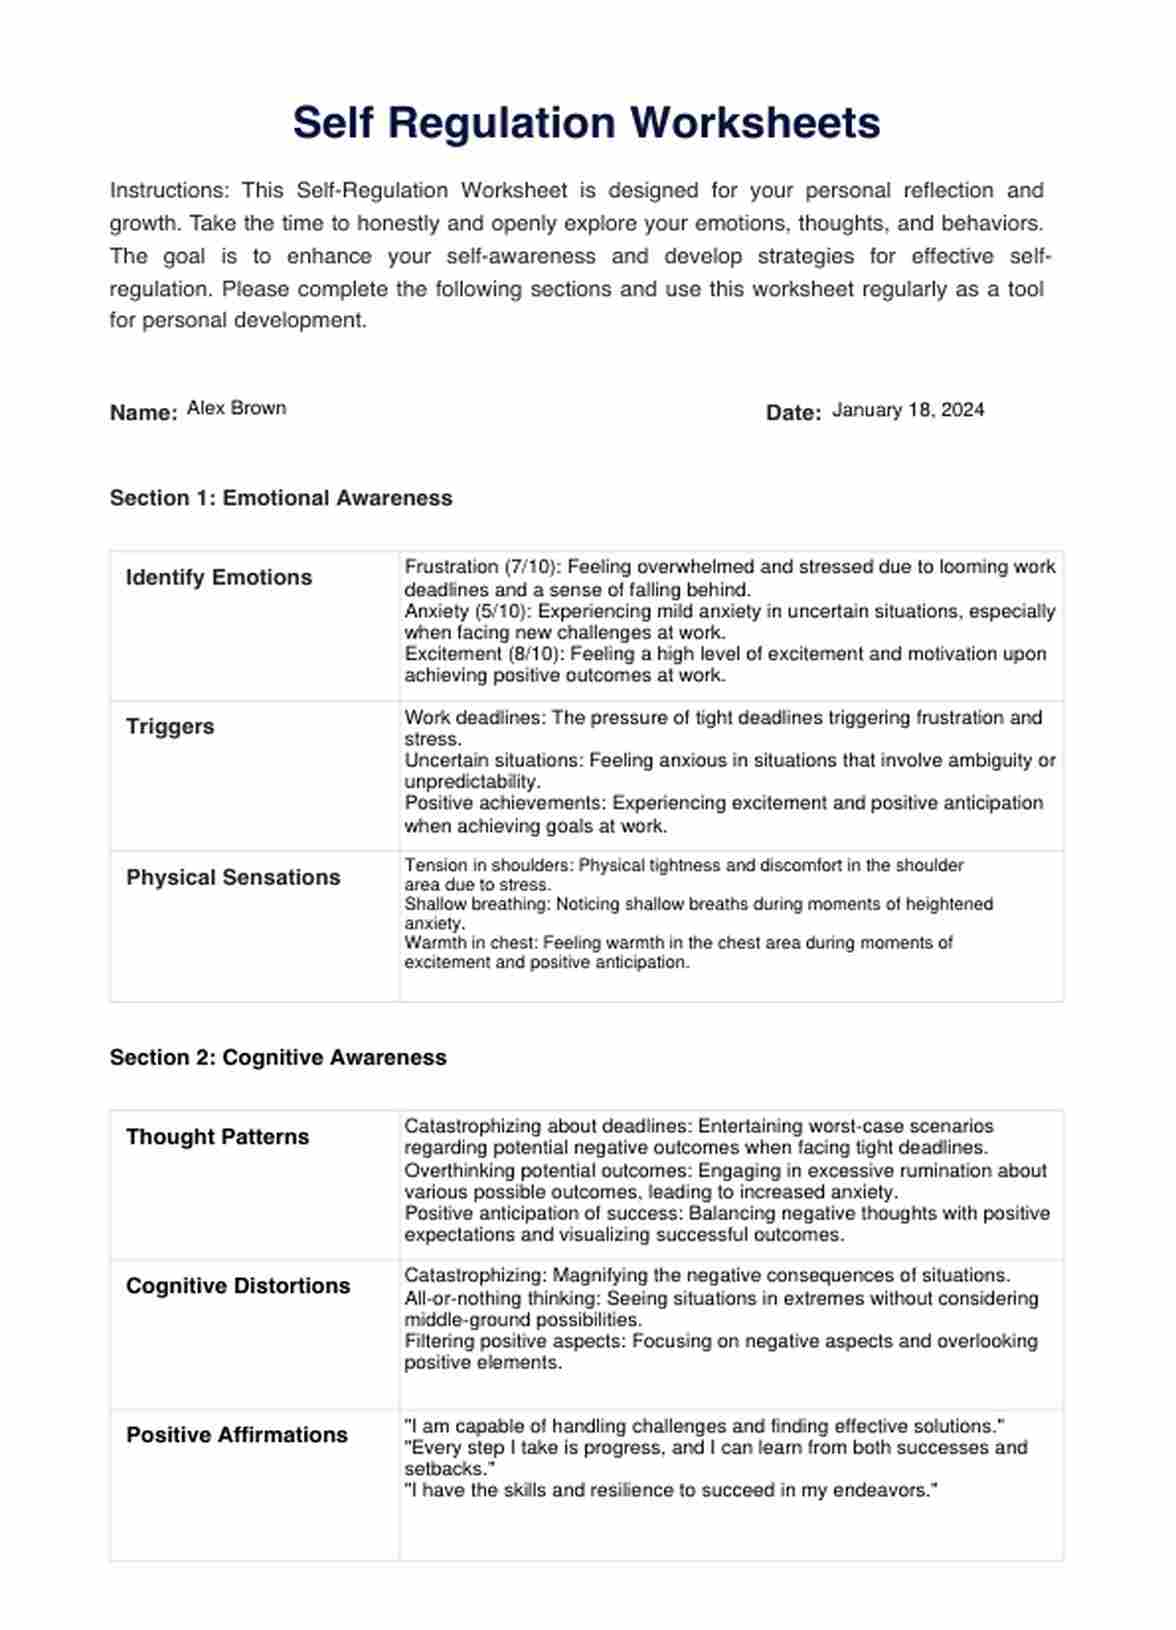 Self Regulation Worksheets PDF Example